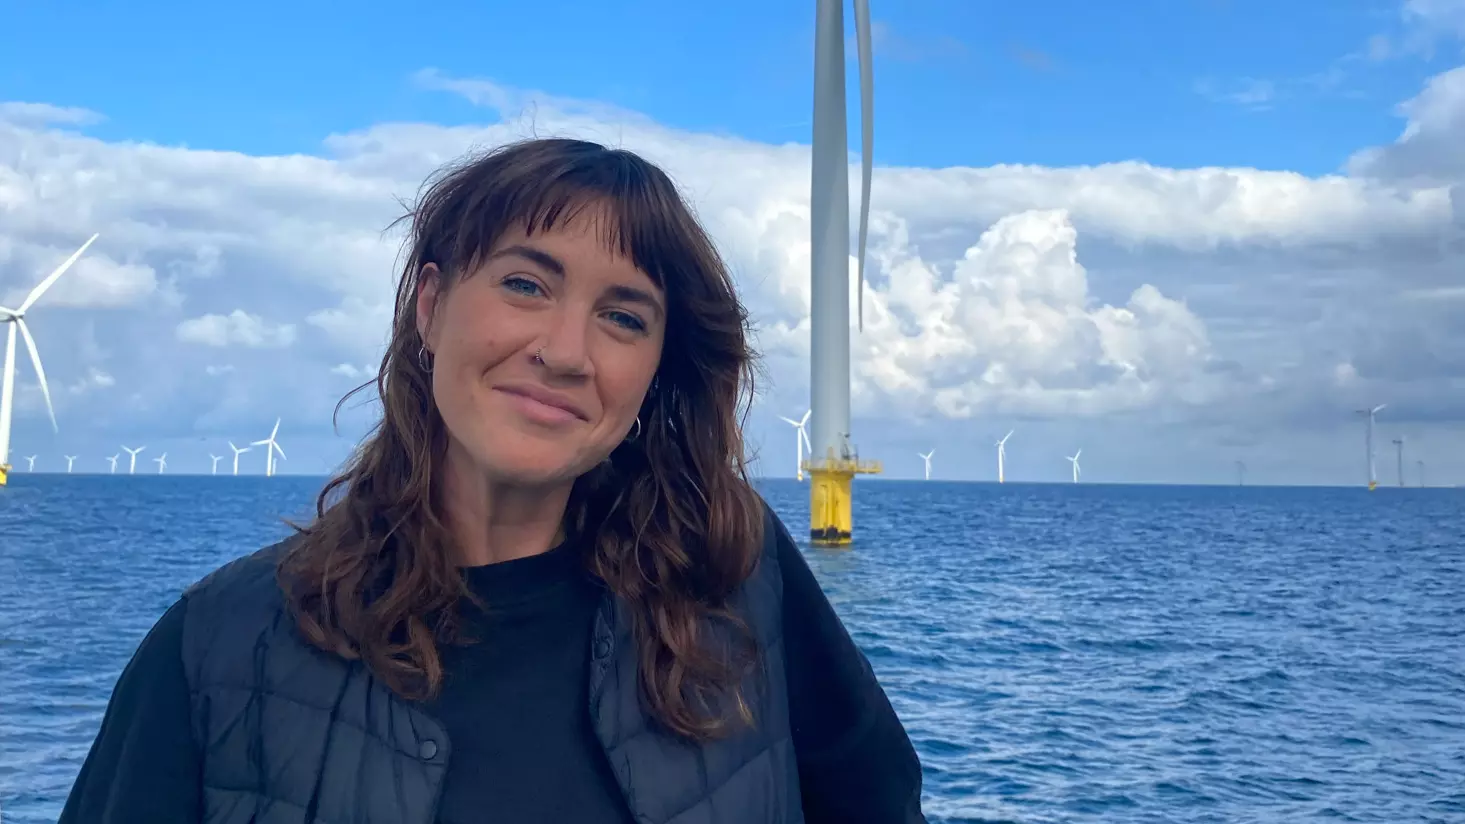 Alyssa visiting an offshore wind farm in Denmark